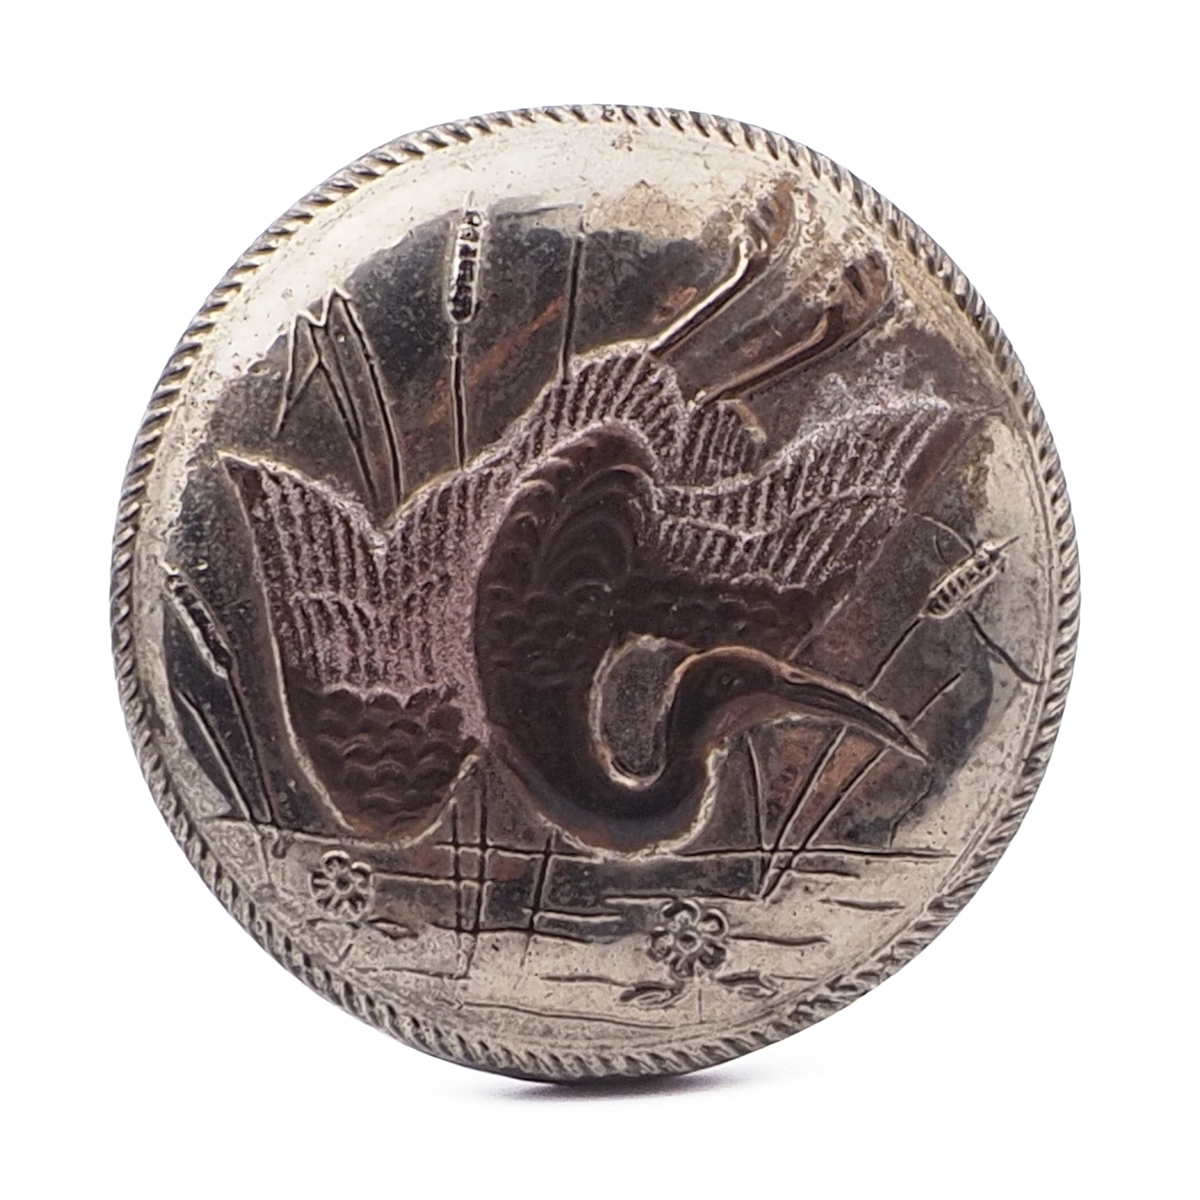 Antique Victorian Czech silver lustre metallic black glass heron pendant hatpin bead 35mm